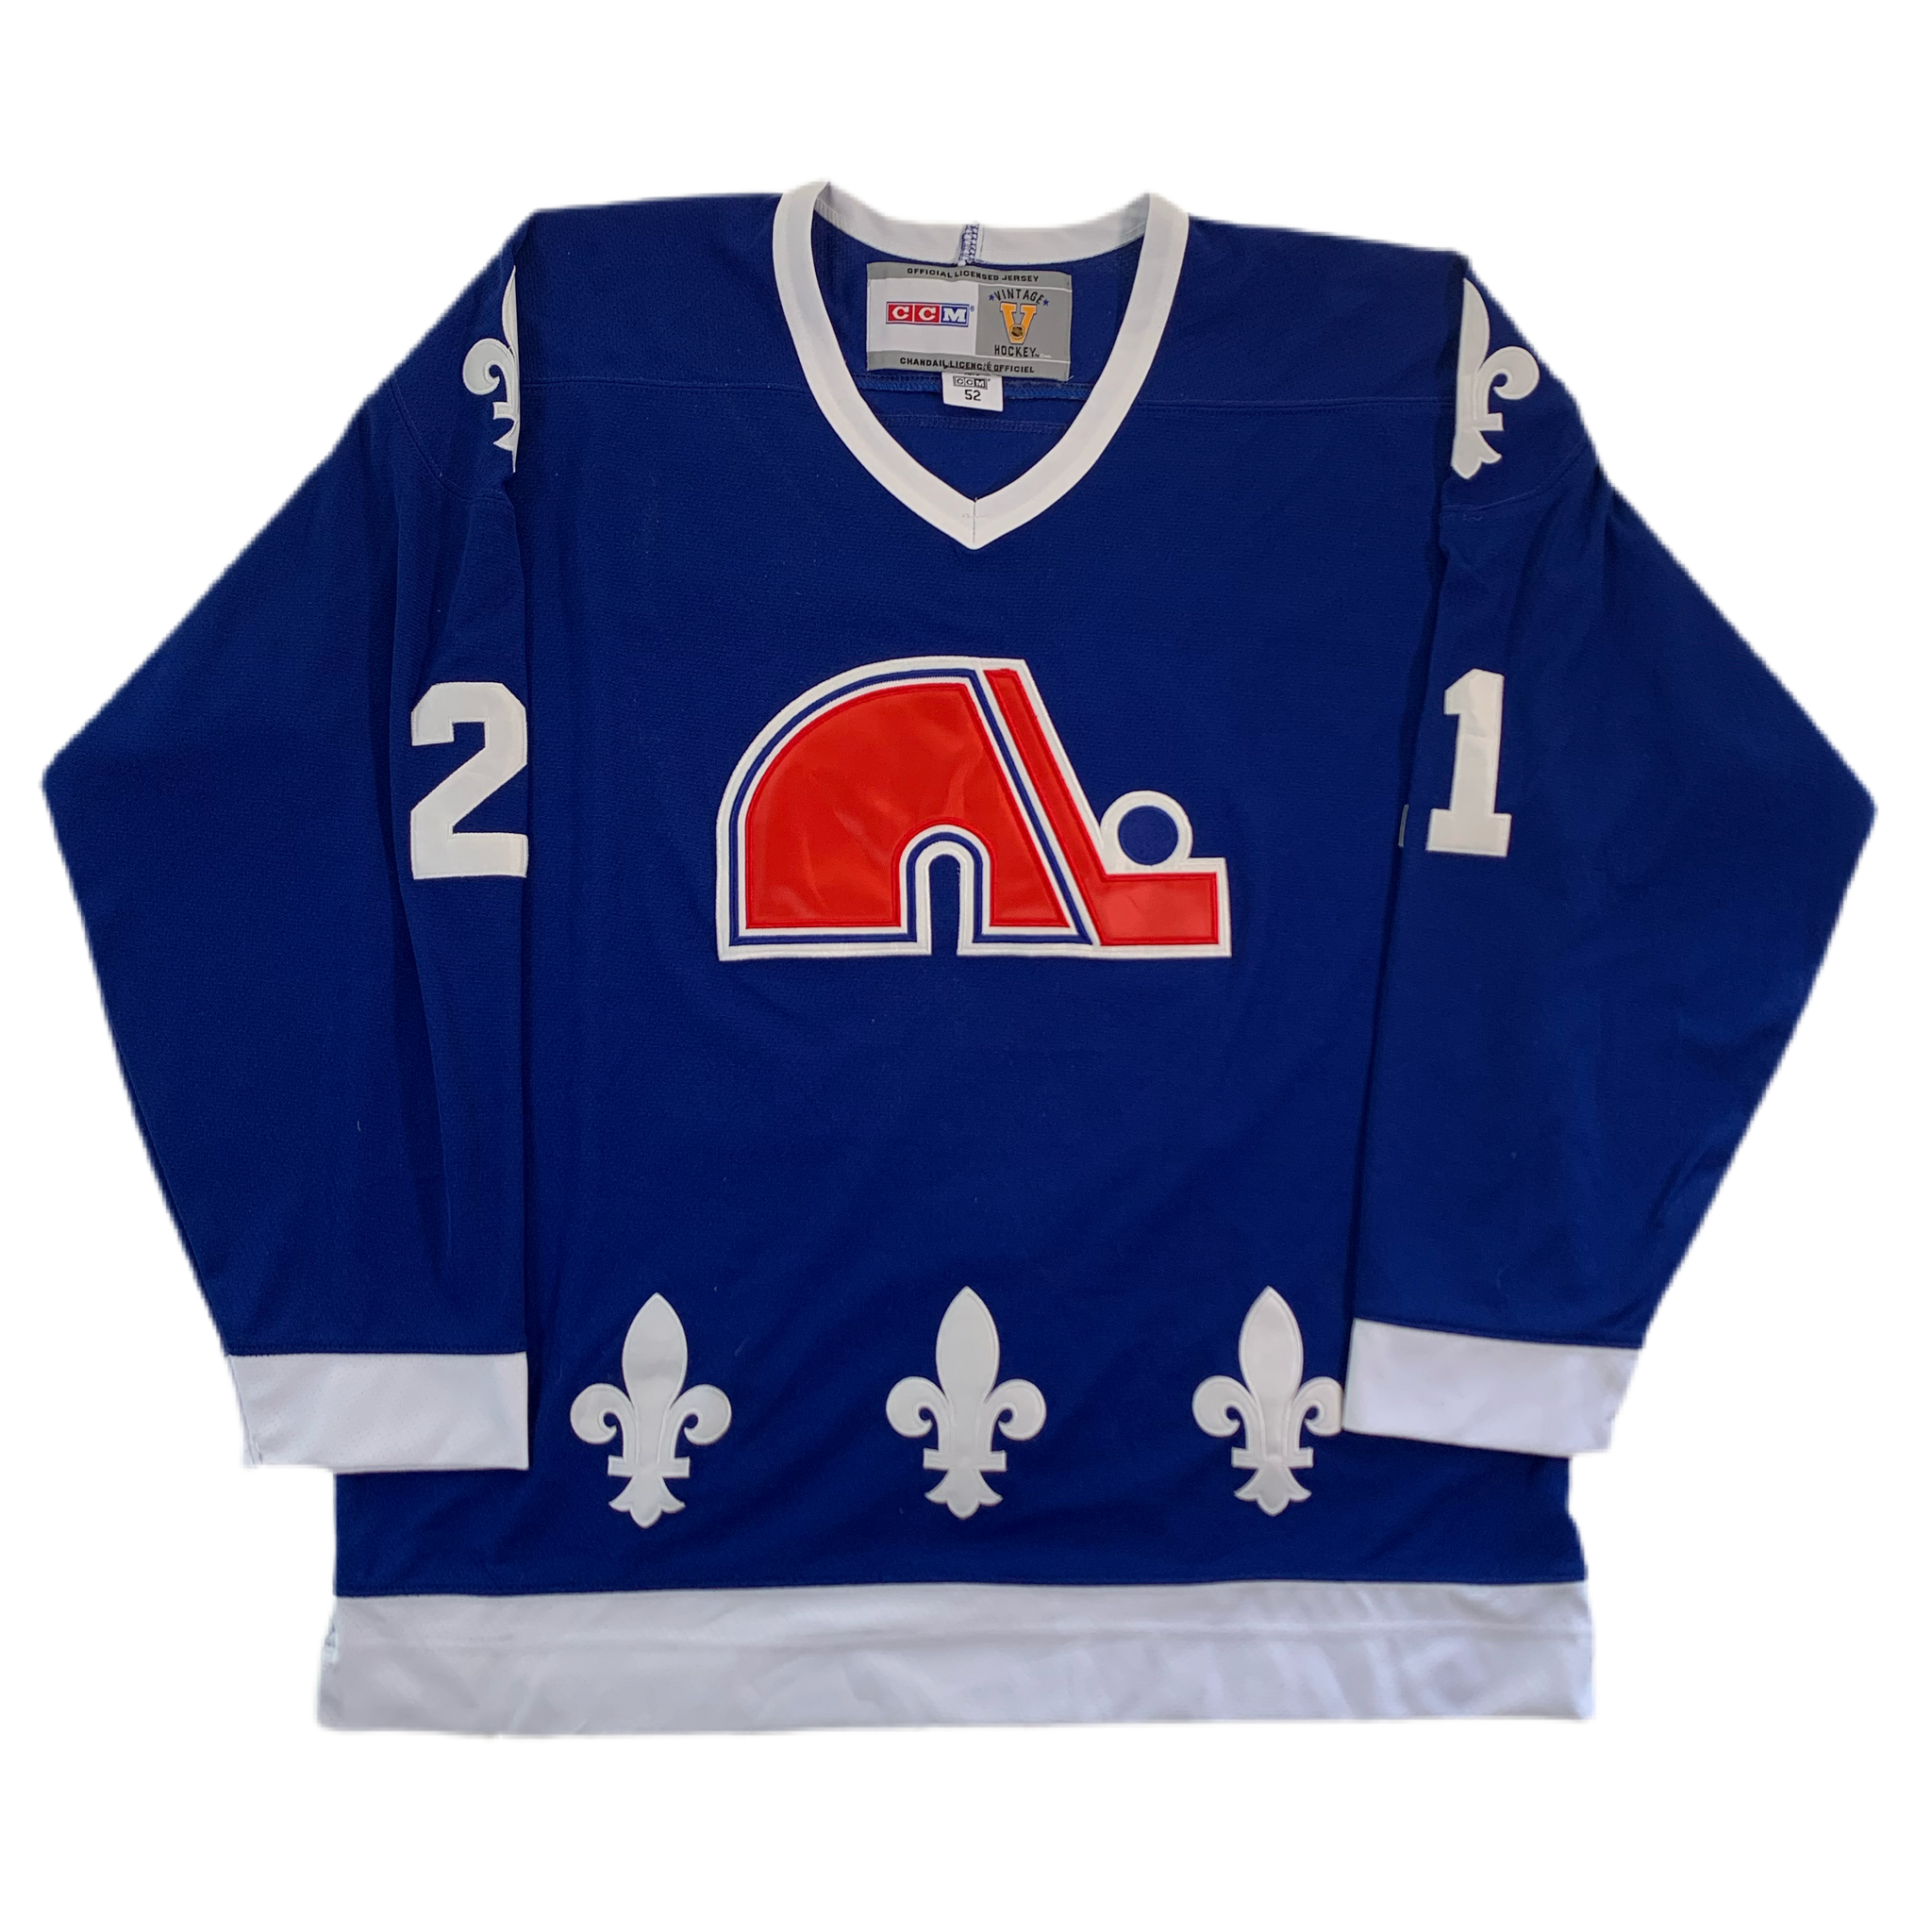 The Quebec Nordiques Jersey